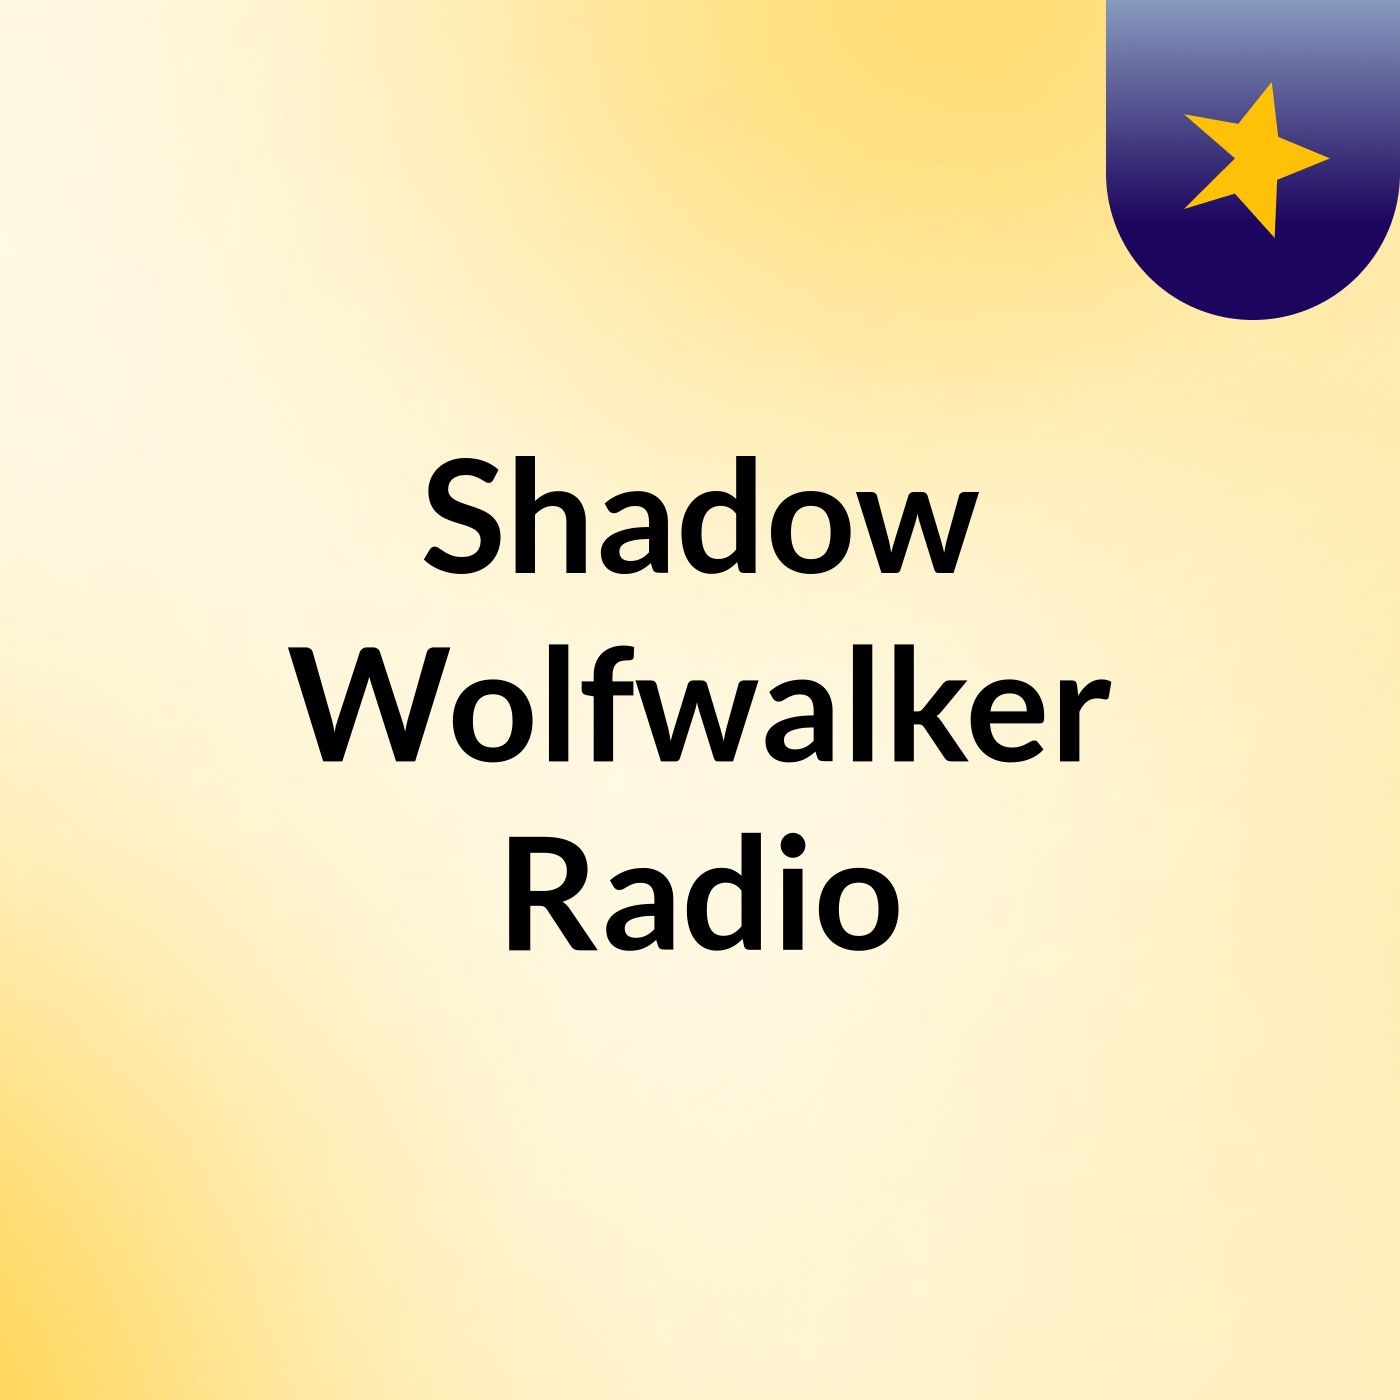 Shadow Wolfwalker Radio